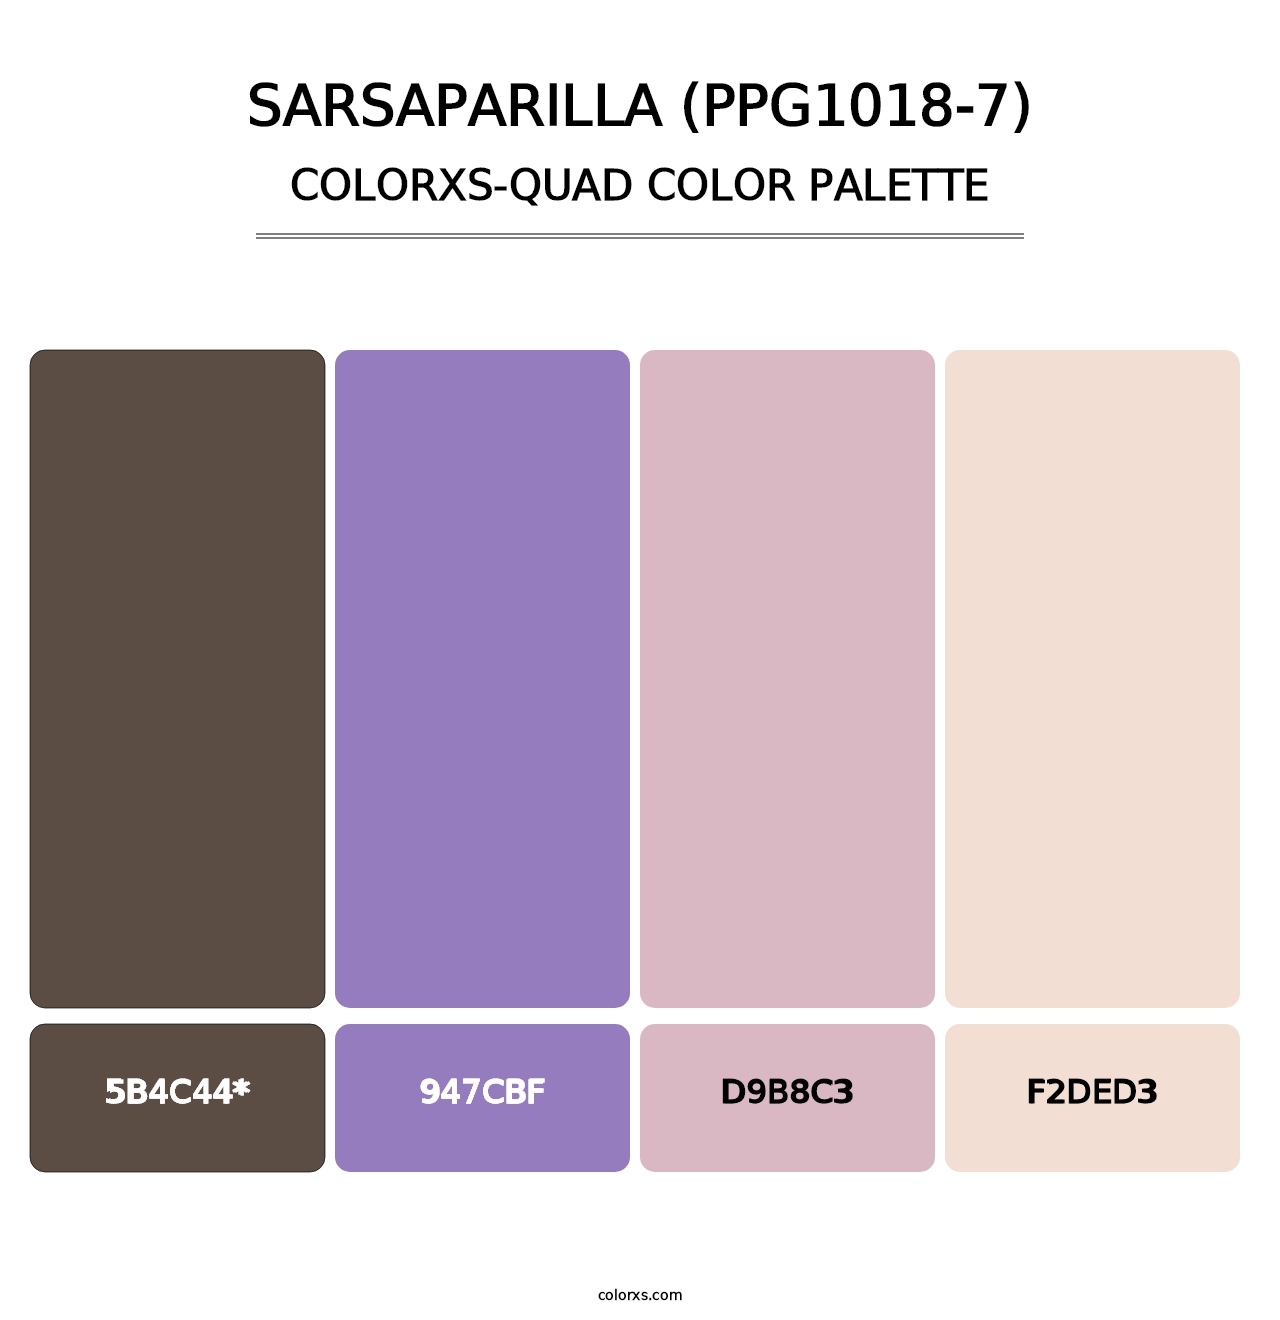 Sarsaparilla (PPG1018-7) - Colorxs Quad Palette